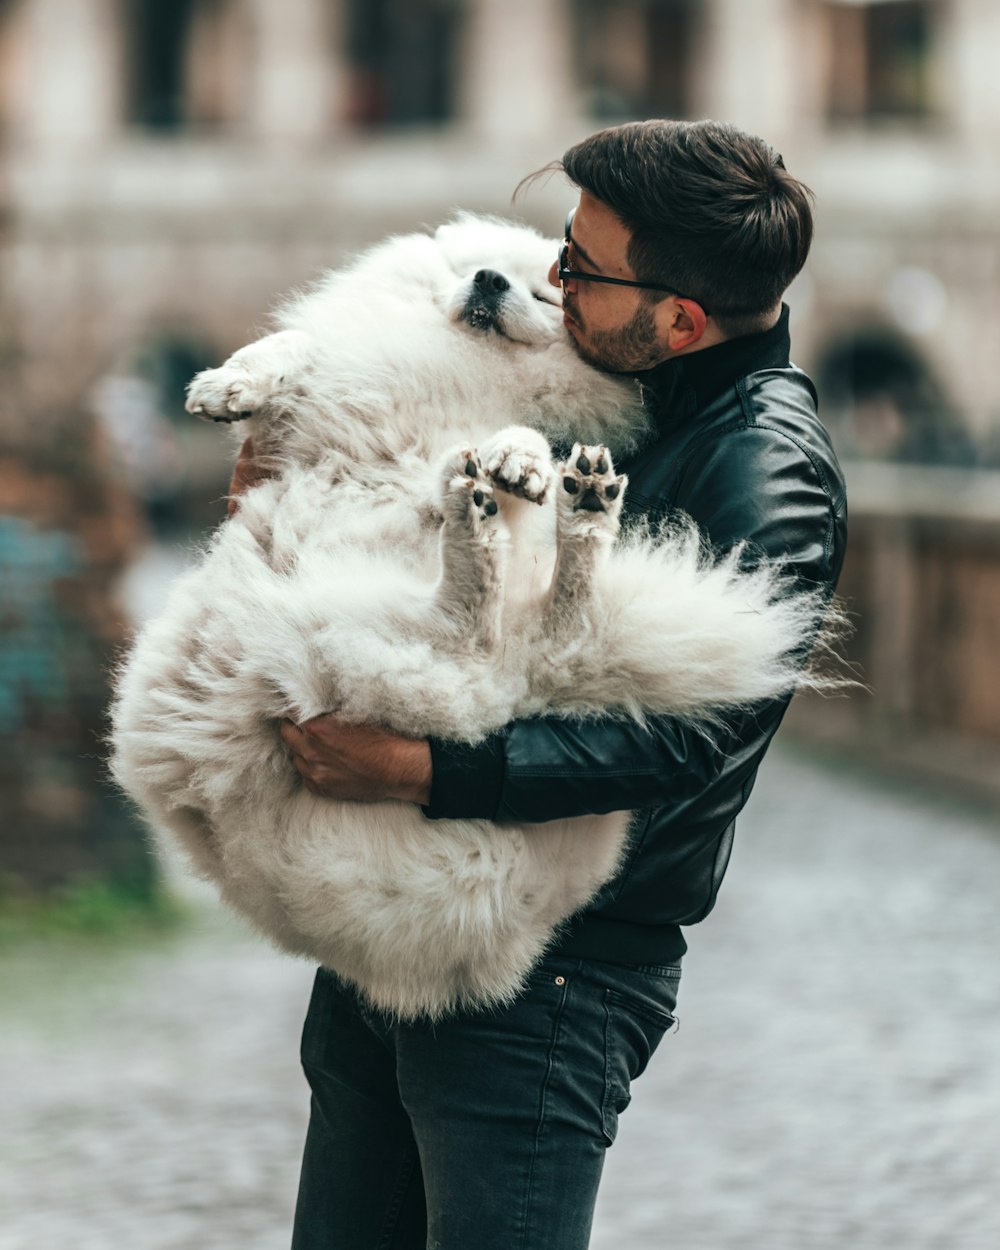 man in eyeglasses and black jacket carrying white dog